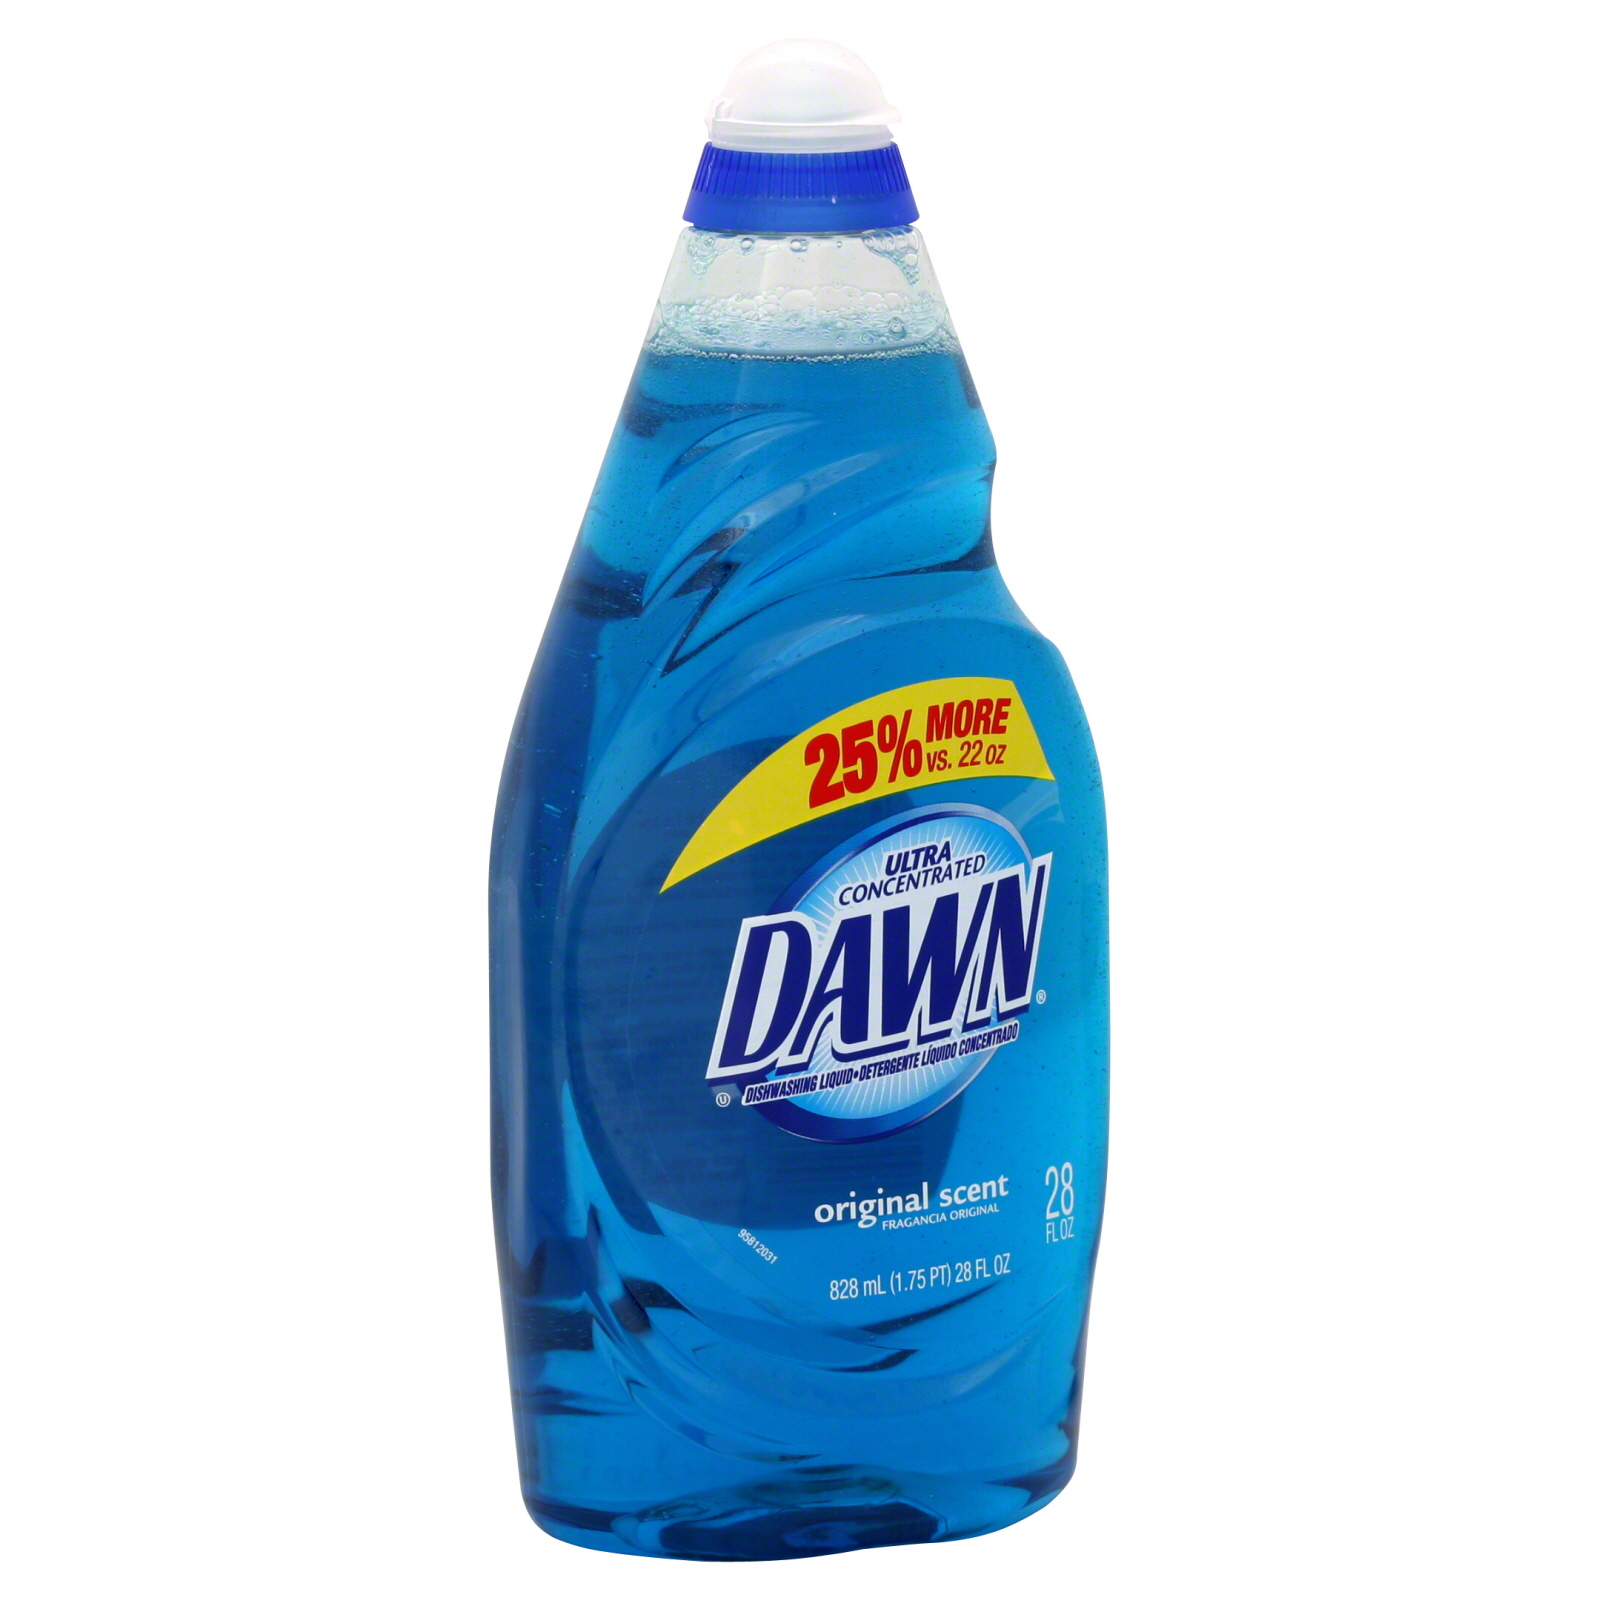 Dawn Dishwashing Liquid, Ultra Concentrated, Original Scent, 28 fl oz (828 ml) (1.75 pt)